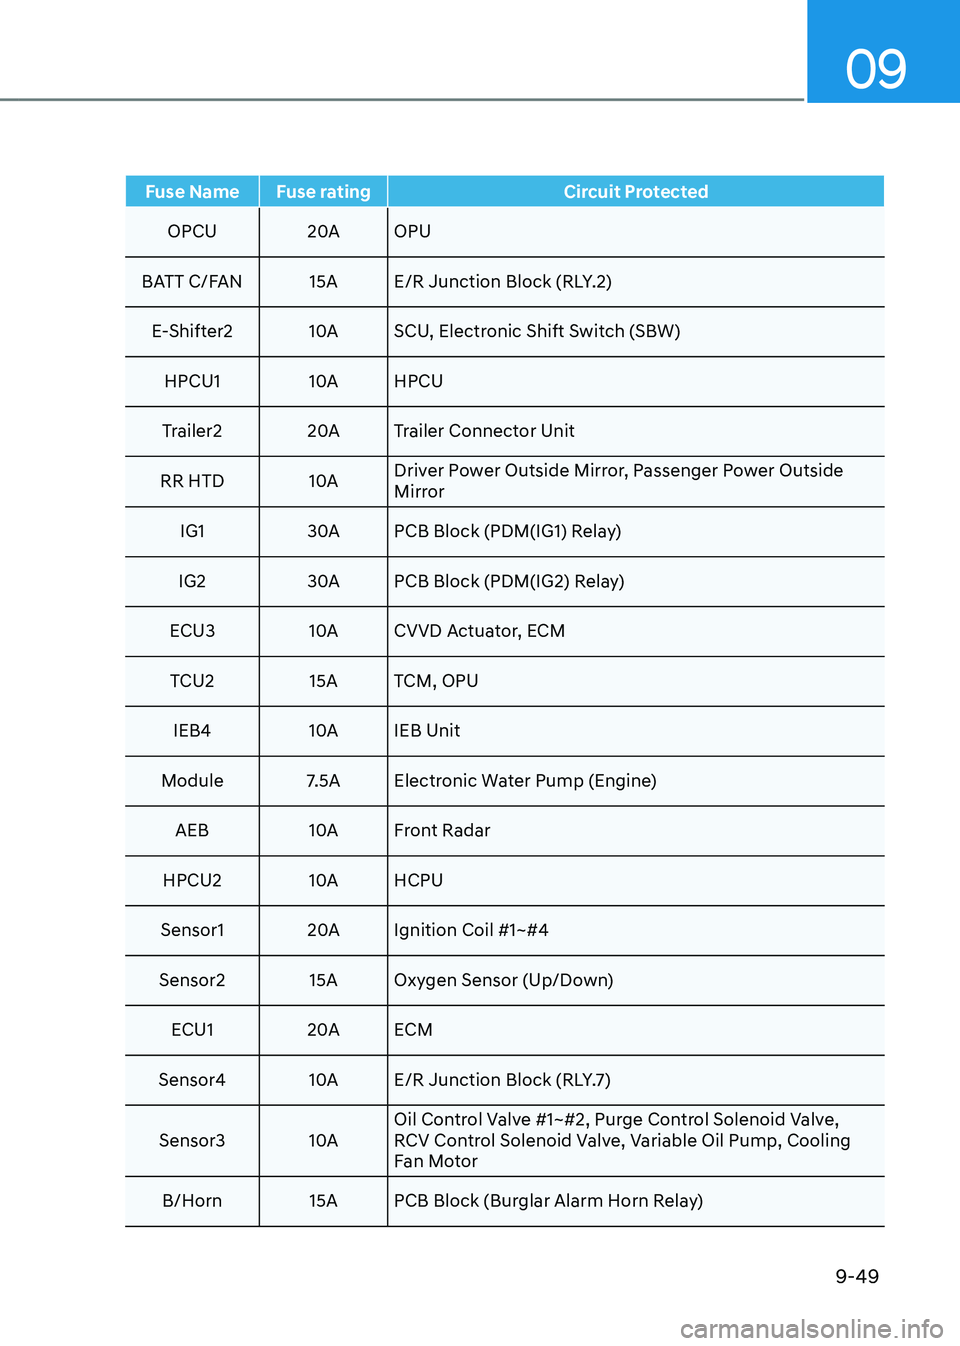 HYUNDAI TUCSON HYBRID 2021  Owners Manual 09
9-49
Fuse Name Fuse ratingCircuit Protected
OPCU 20AOPU
BATT C/FAN 15A E/R Junction Block (RLY.2) E-Shifter2 10ASCU, Electronic Shift Switch (SBW)
HPCU1 10AHPCU
Trailer2 20ATrailer Connector Unit
R